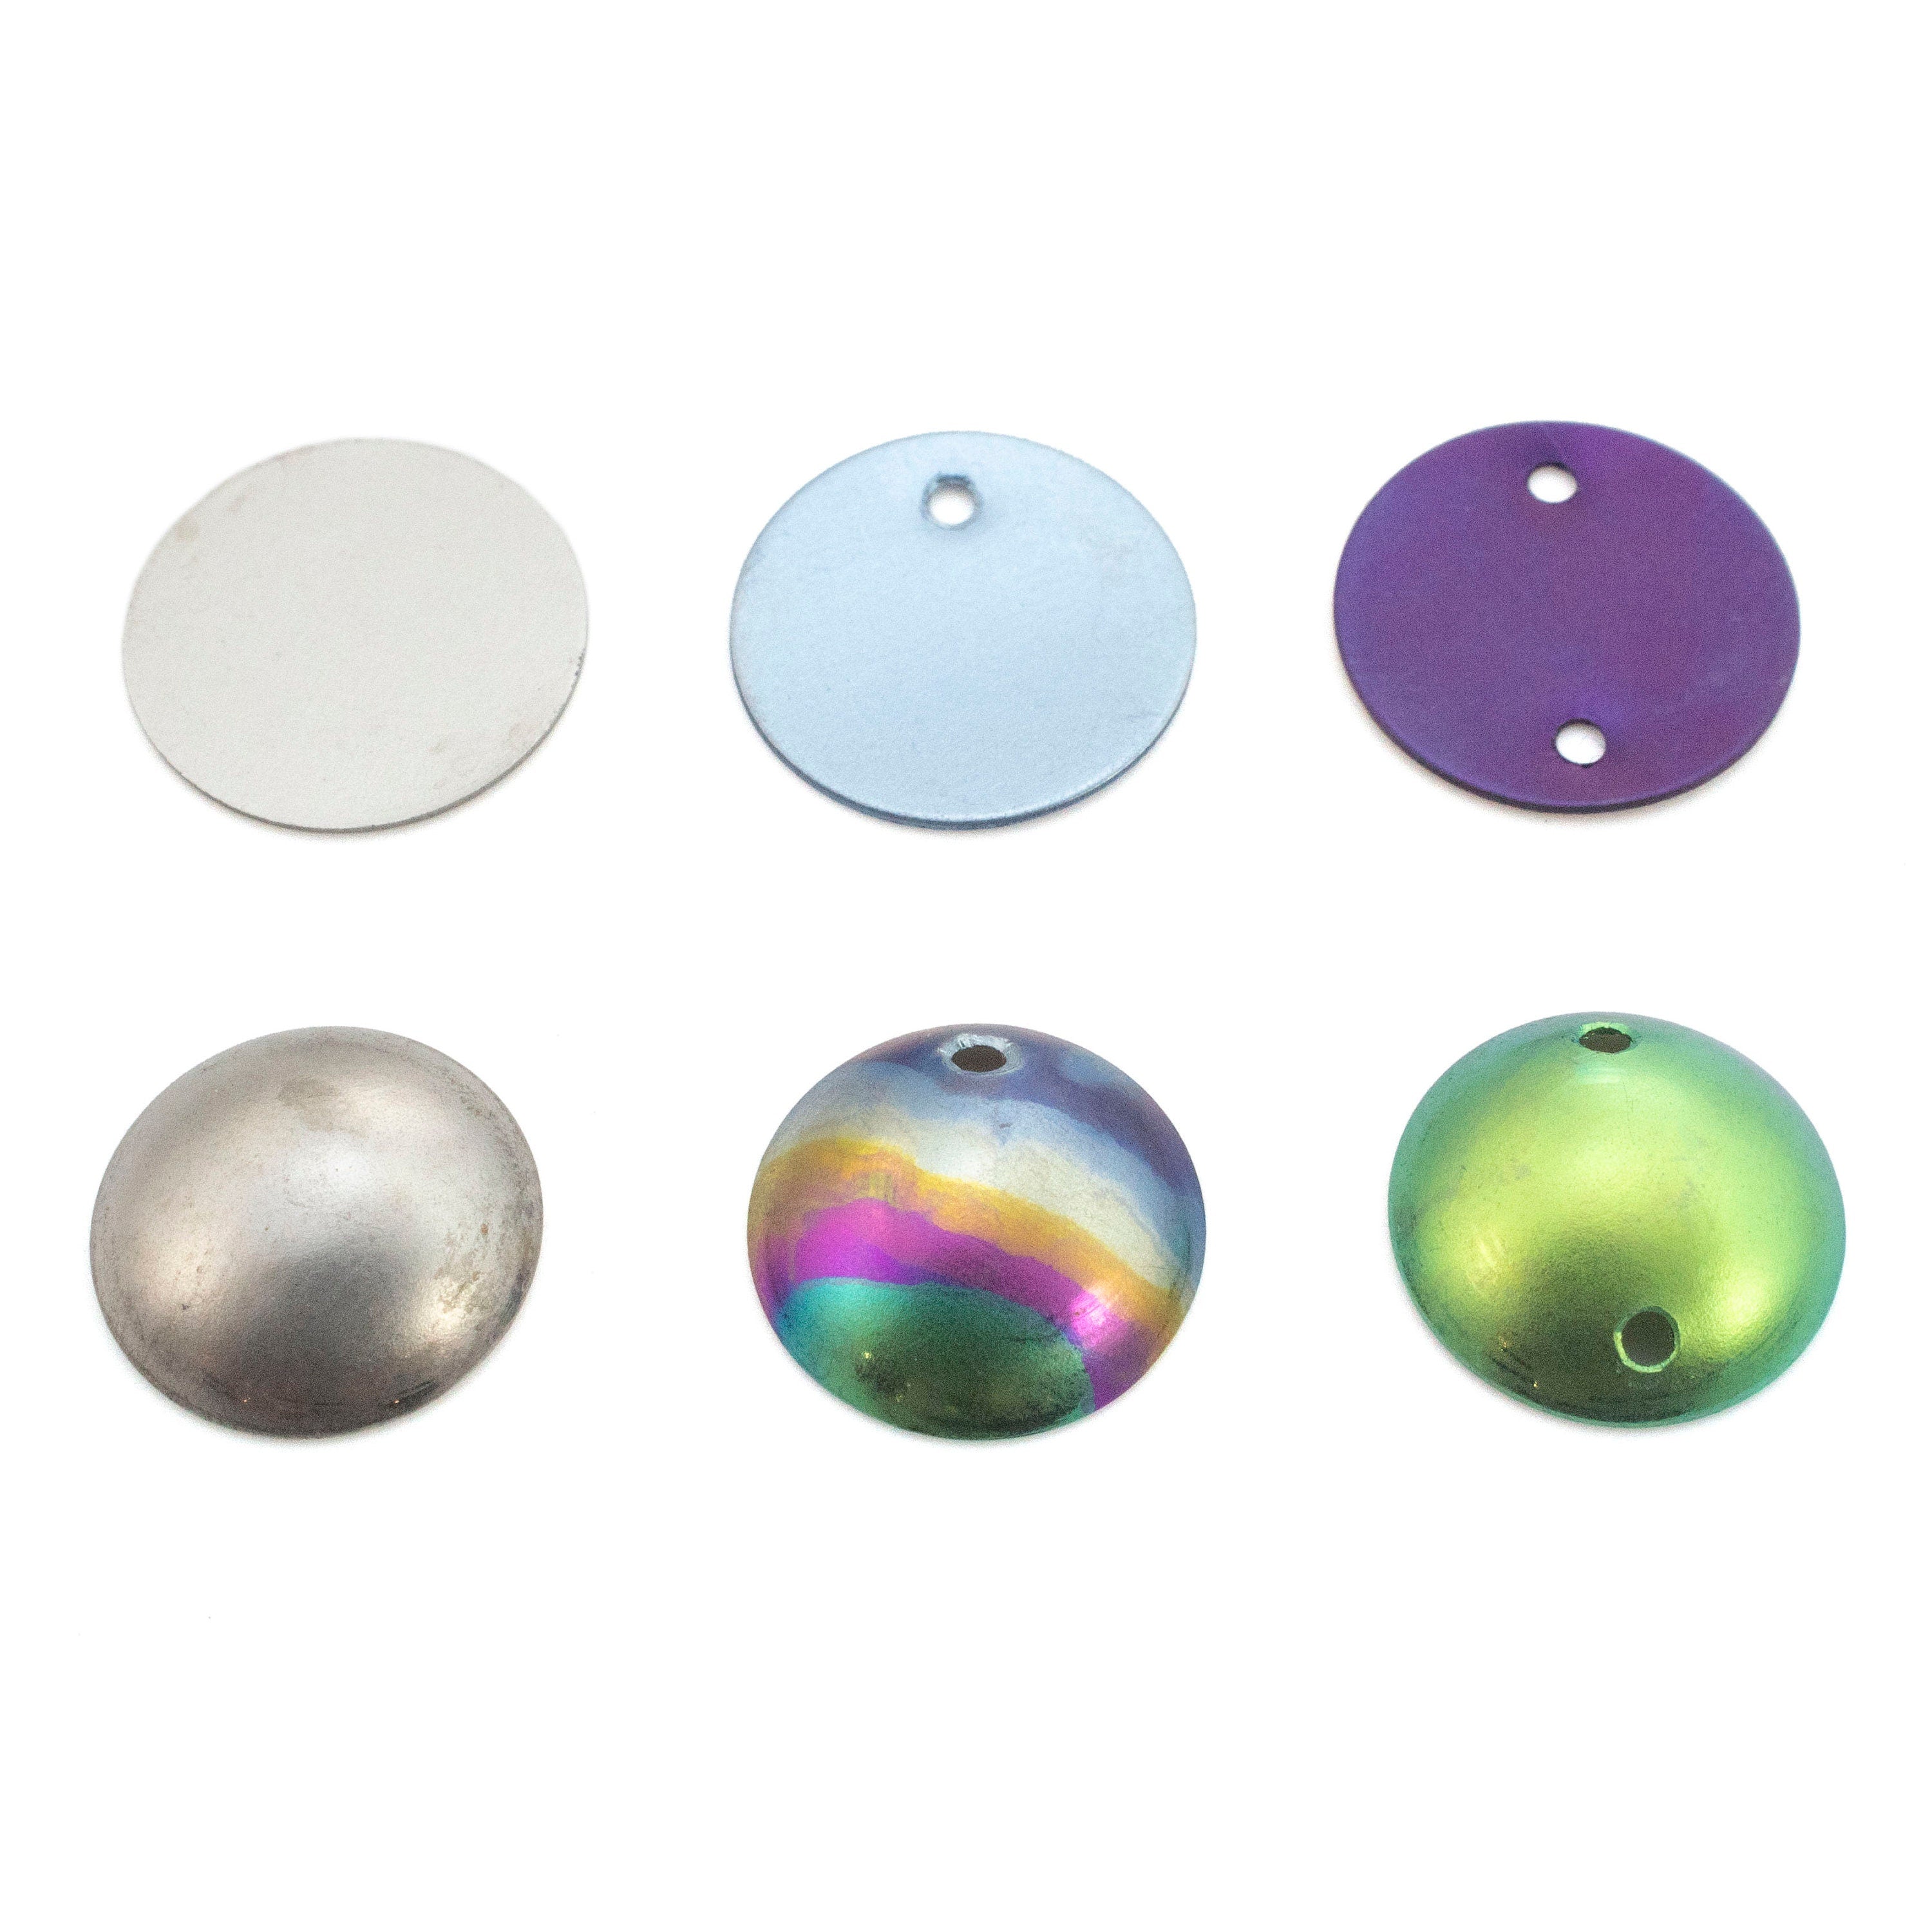 Niobium Stamping Discs - 1 Pair of 28 gauge Blanks Tags in 4 Sizes